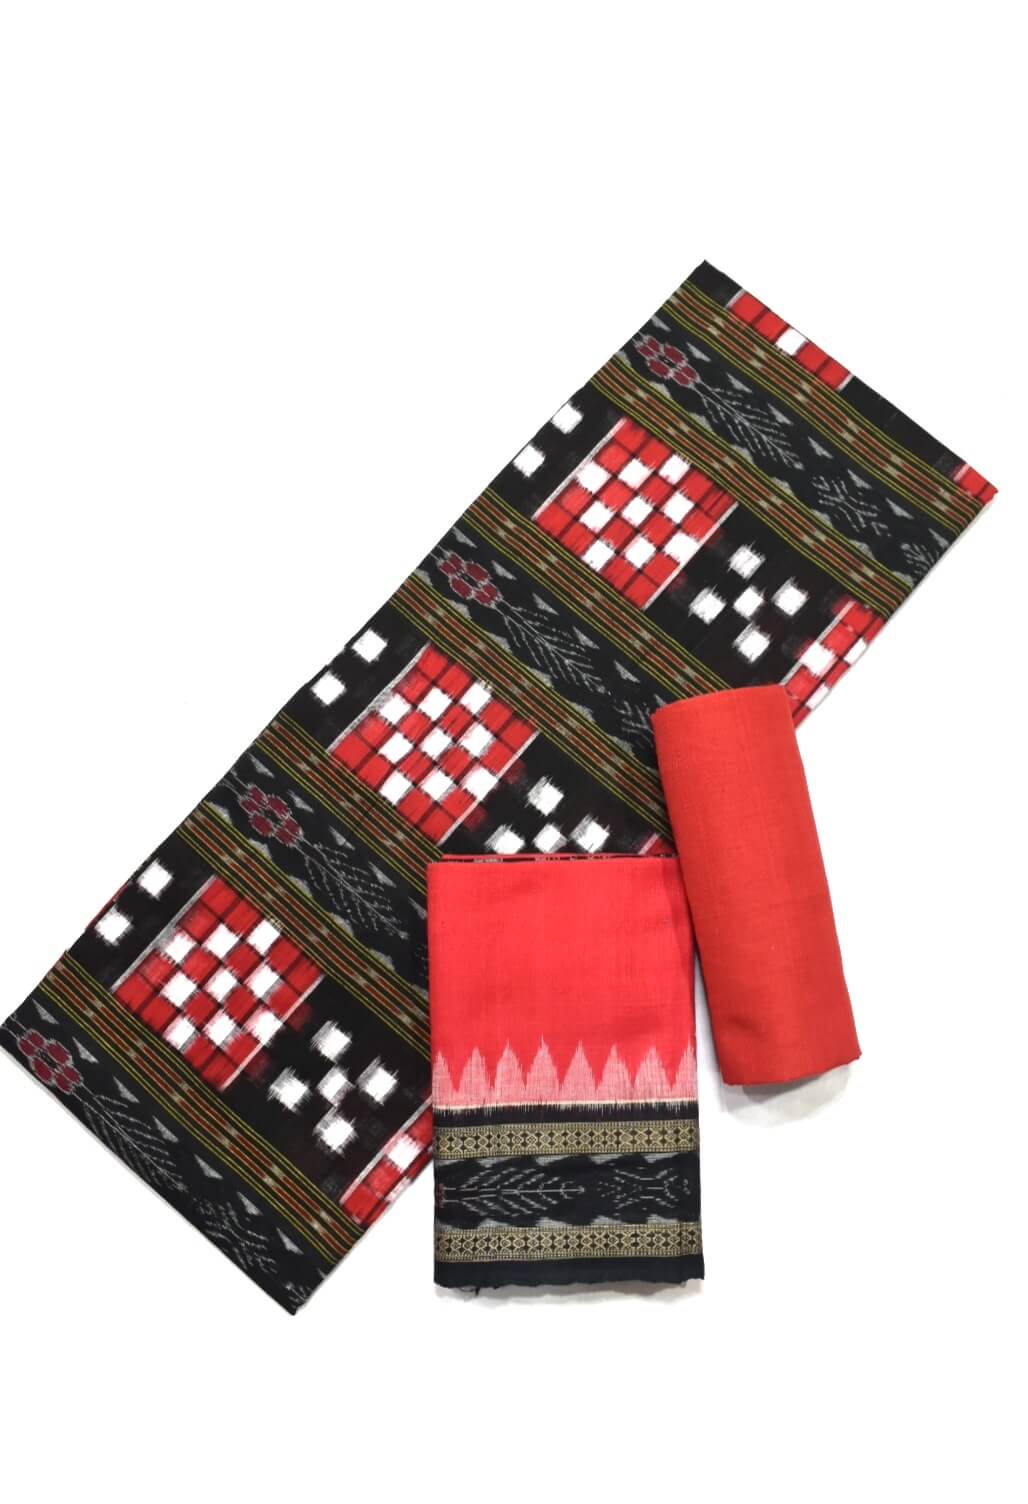 Sambalpuri Cotton Dress Materials | Cotton dress materials, Dress materials,  Hand weaving